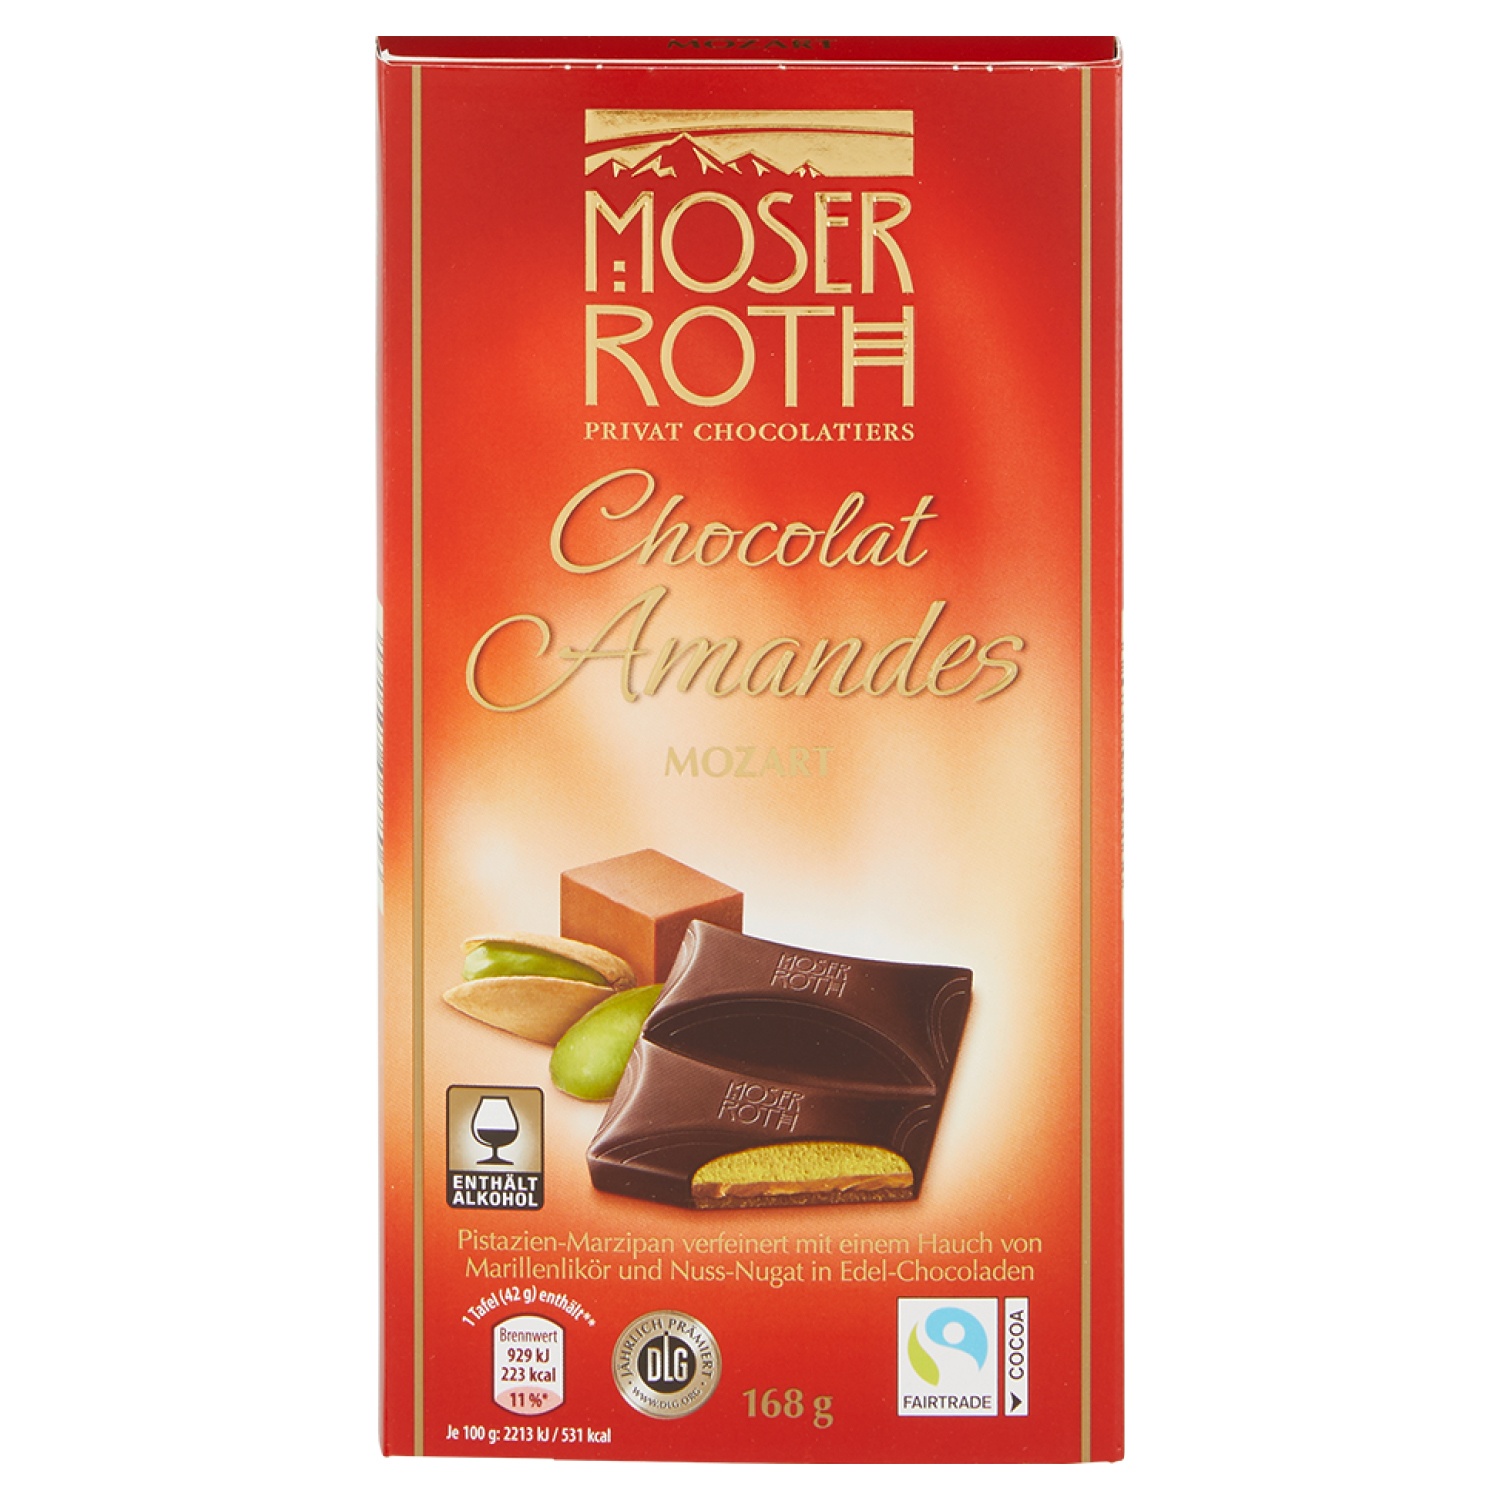 MOSER ROTH Chocolat Amandes 168g